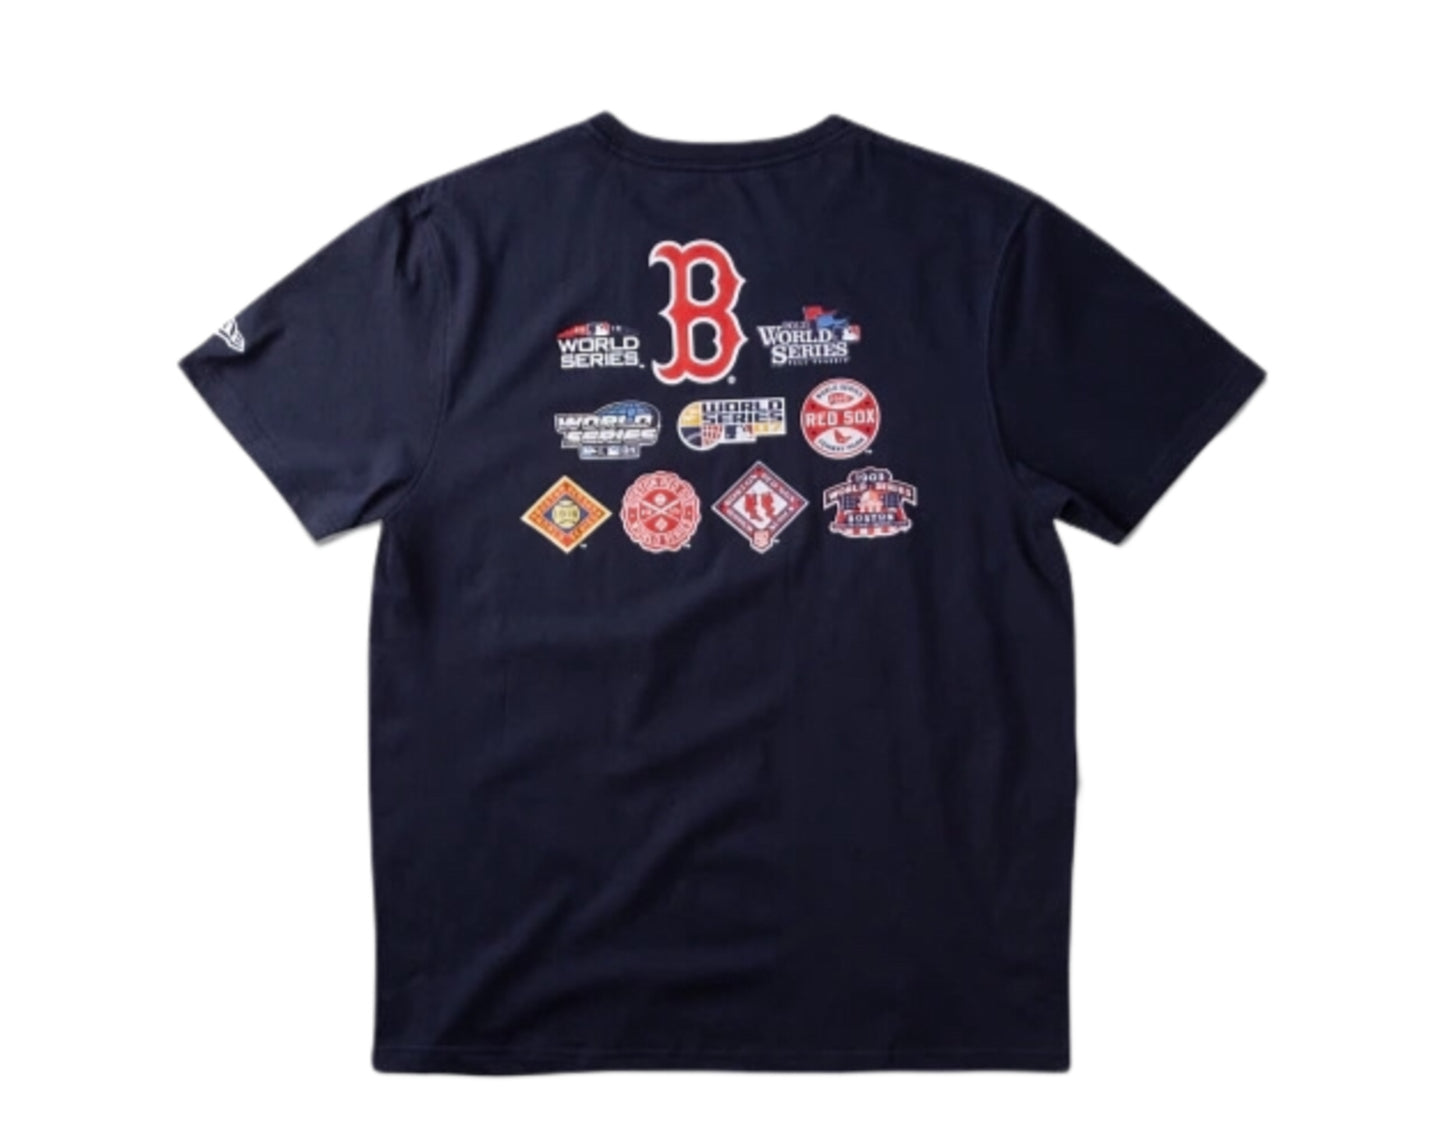 New Era MLB Boston Red Sox World Champions Short Sleeve T-Shirt